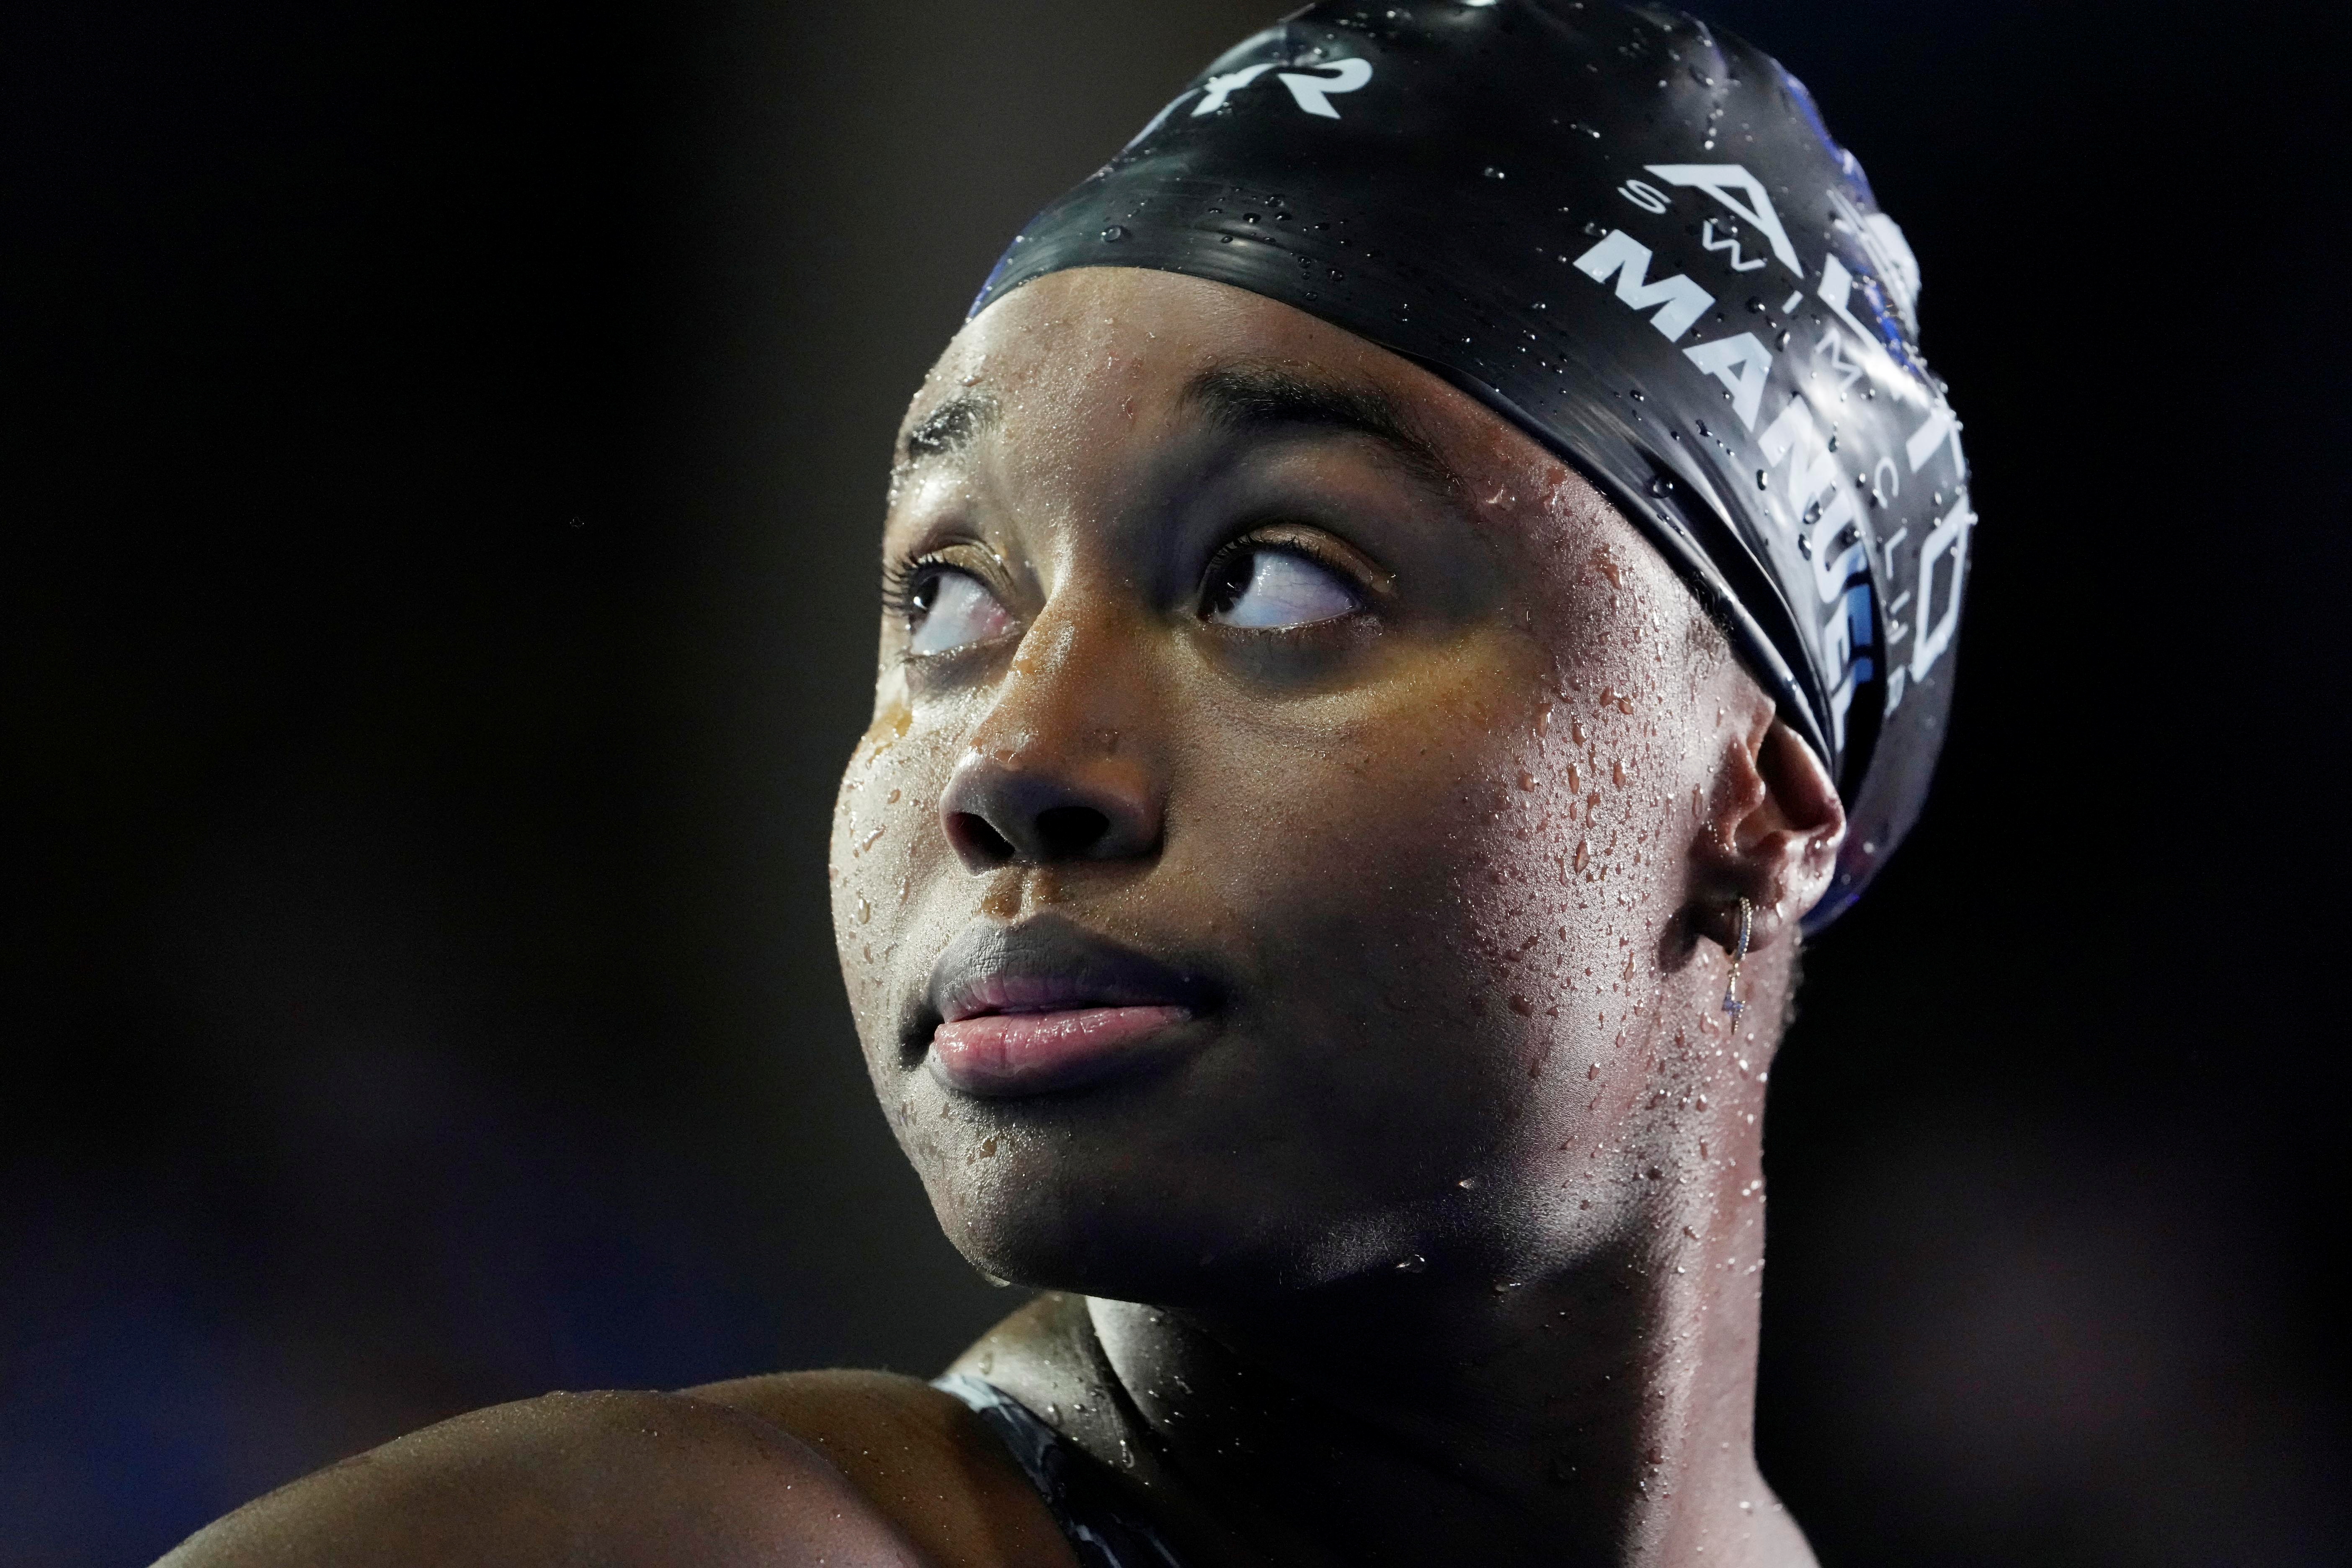 U.S. Swim Team Will Take 11 Teenagers to Tokyo Games - The New York Times